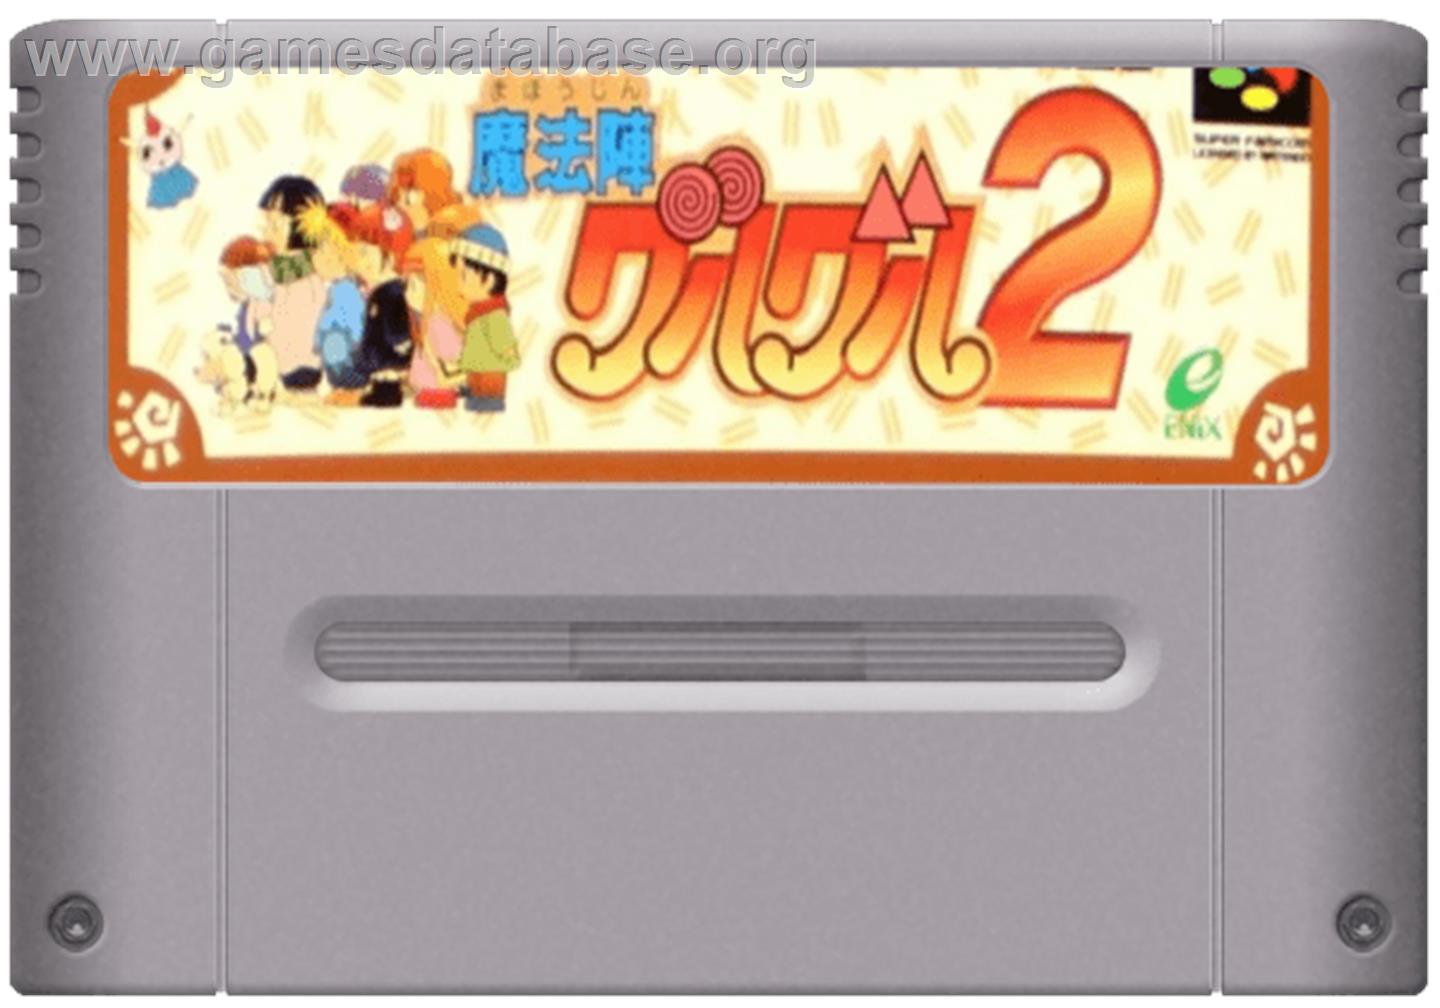 Mahoujin GuruGuru 2 - Nintendo SNES - Artwork - Cartridge